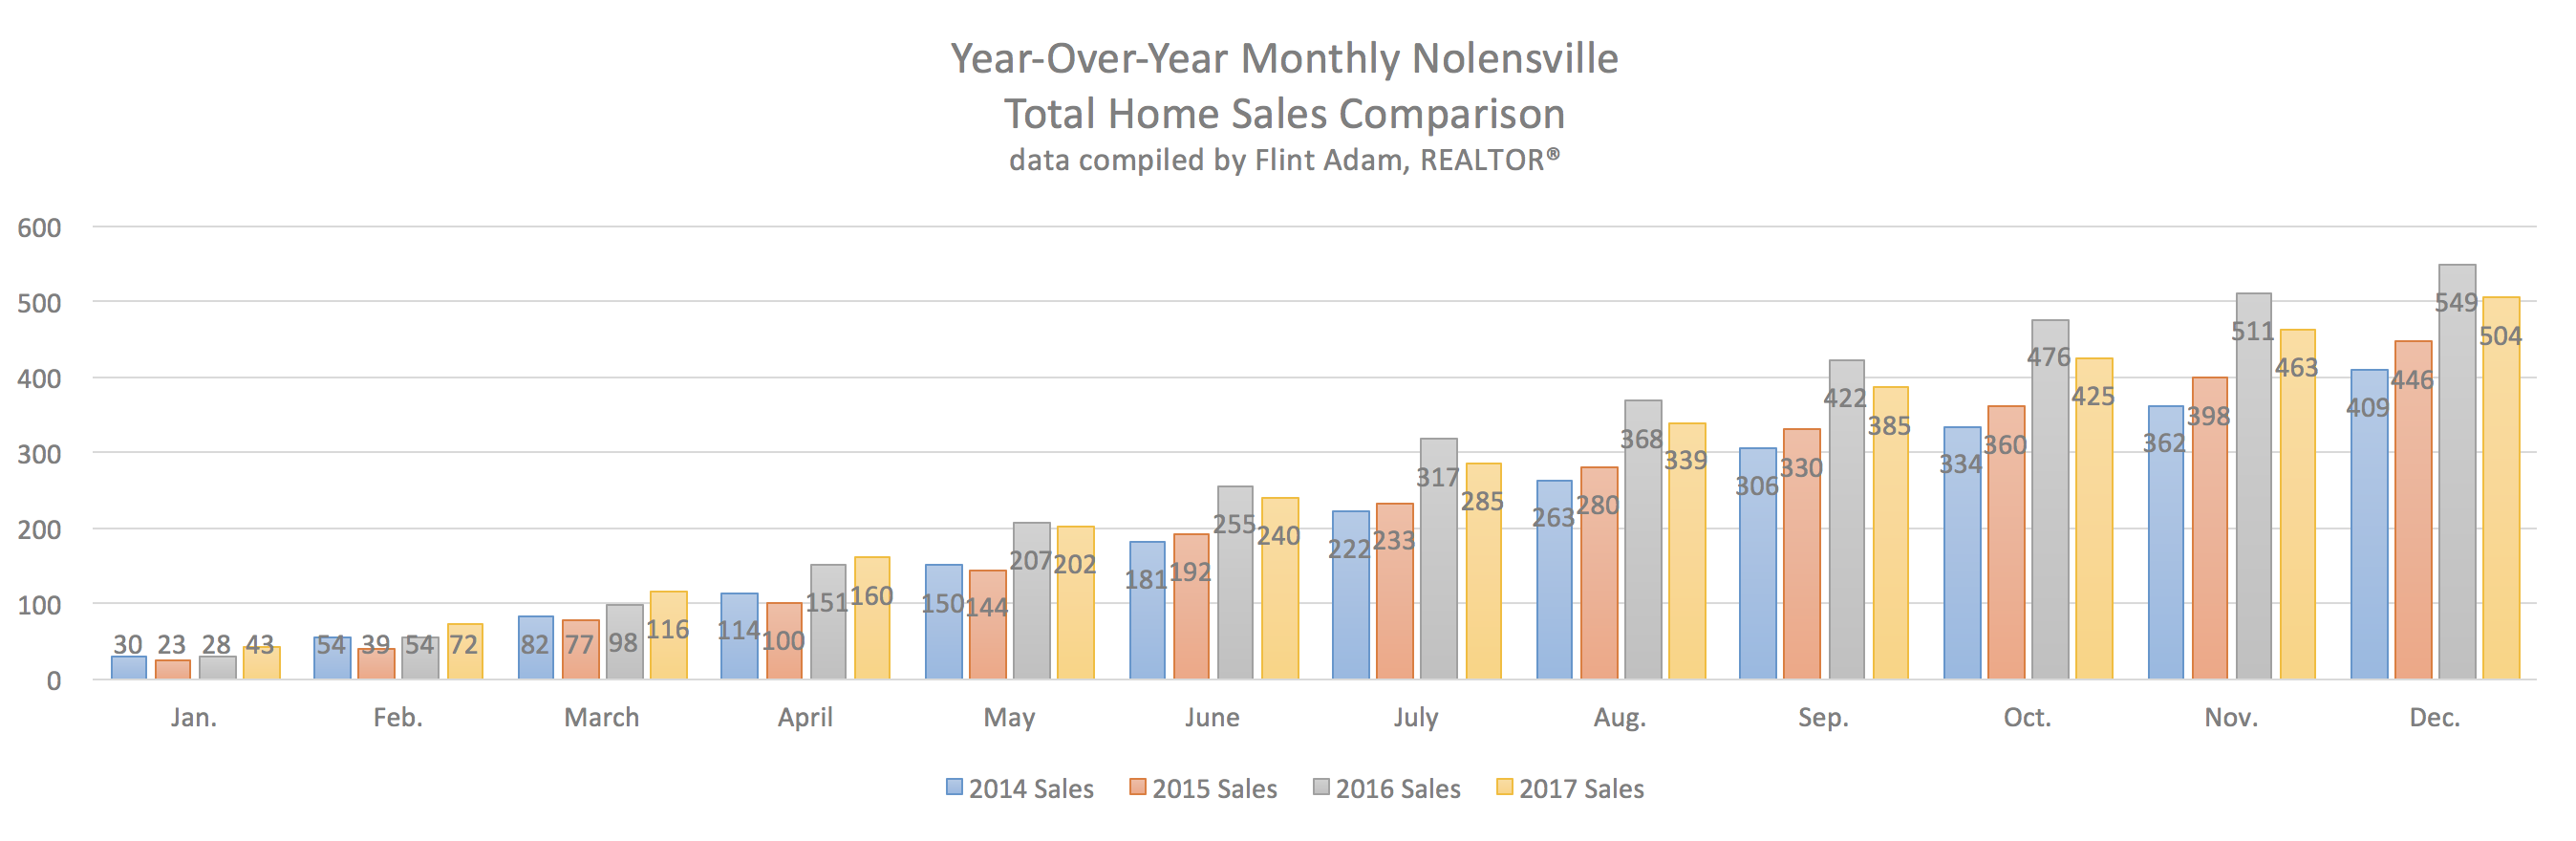 Nolensville Year-Over-Year Home Sales Through December 2017